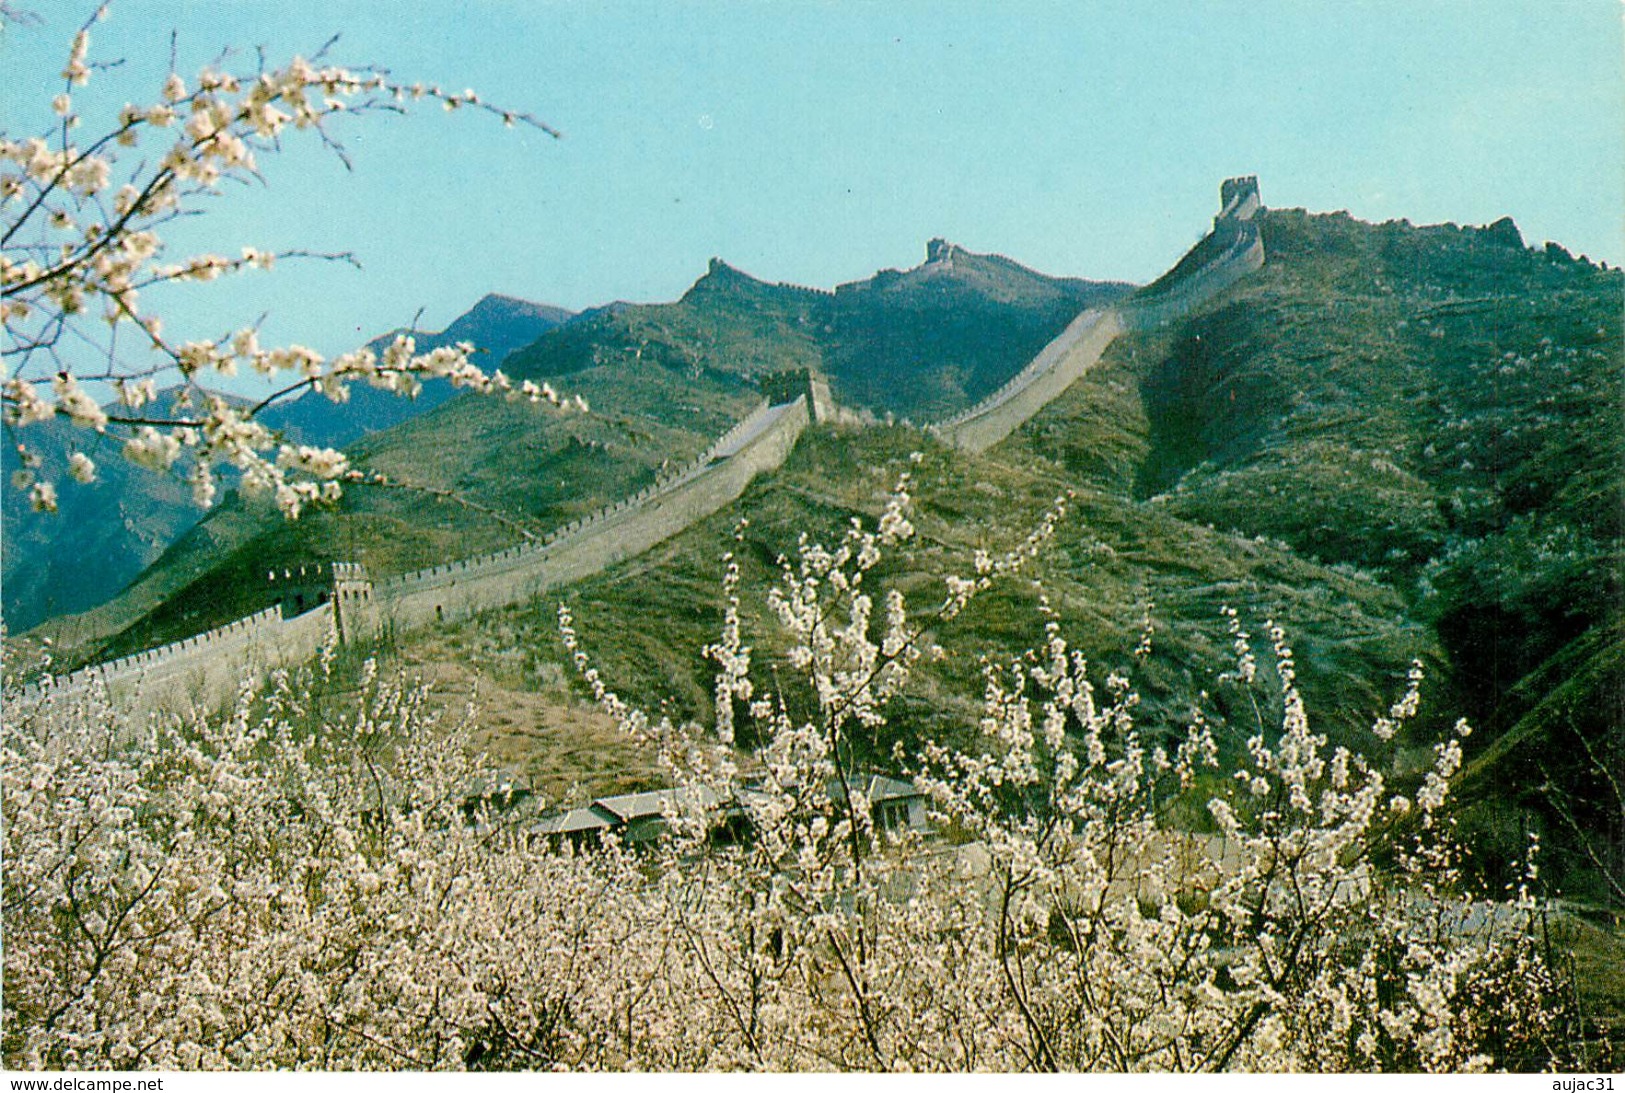 Chine - China - Pekin - Beijing - The Great Wall - 10 cartes avec pochette - Semi moderne grand format - bon état